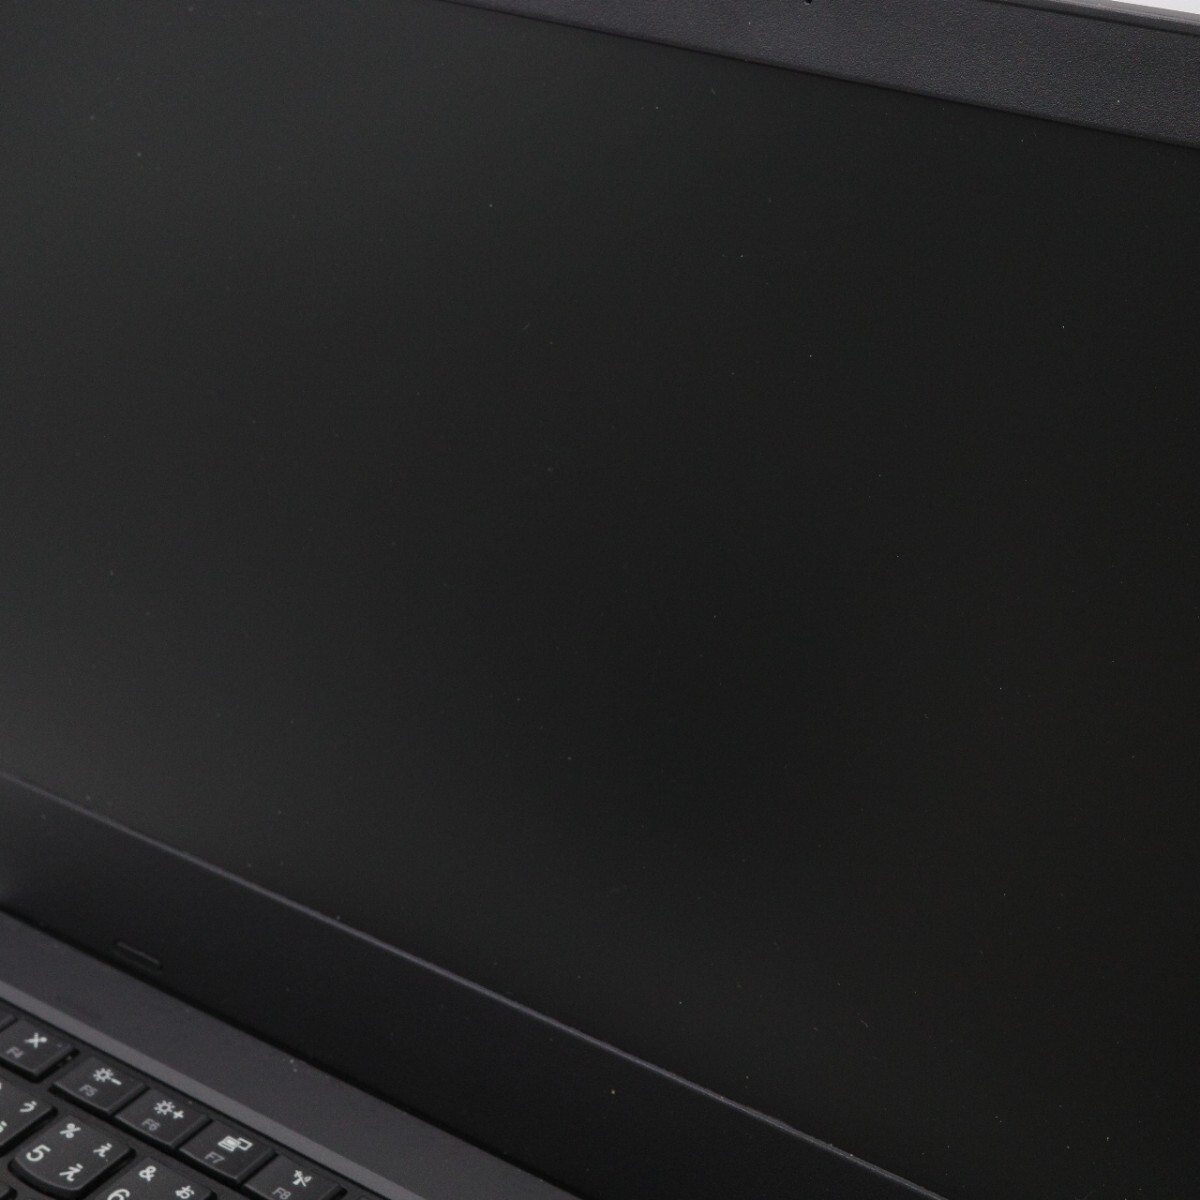 LENOVO ThinkPad 13 2nd Gen レノボ 13.3型 ノートパソコン Compliance intel I3-7100U メモリ4GB Windows10 PC 初期済 簡易動作確認済み_画像5